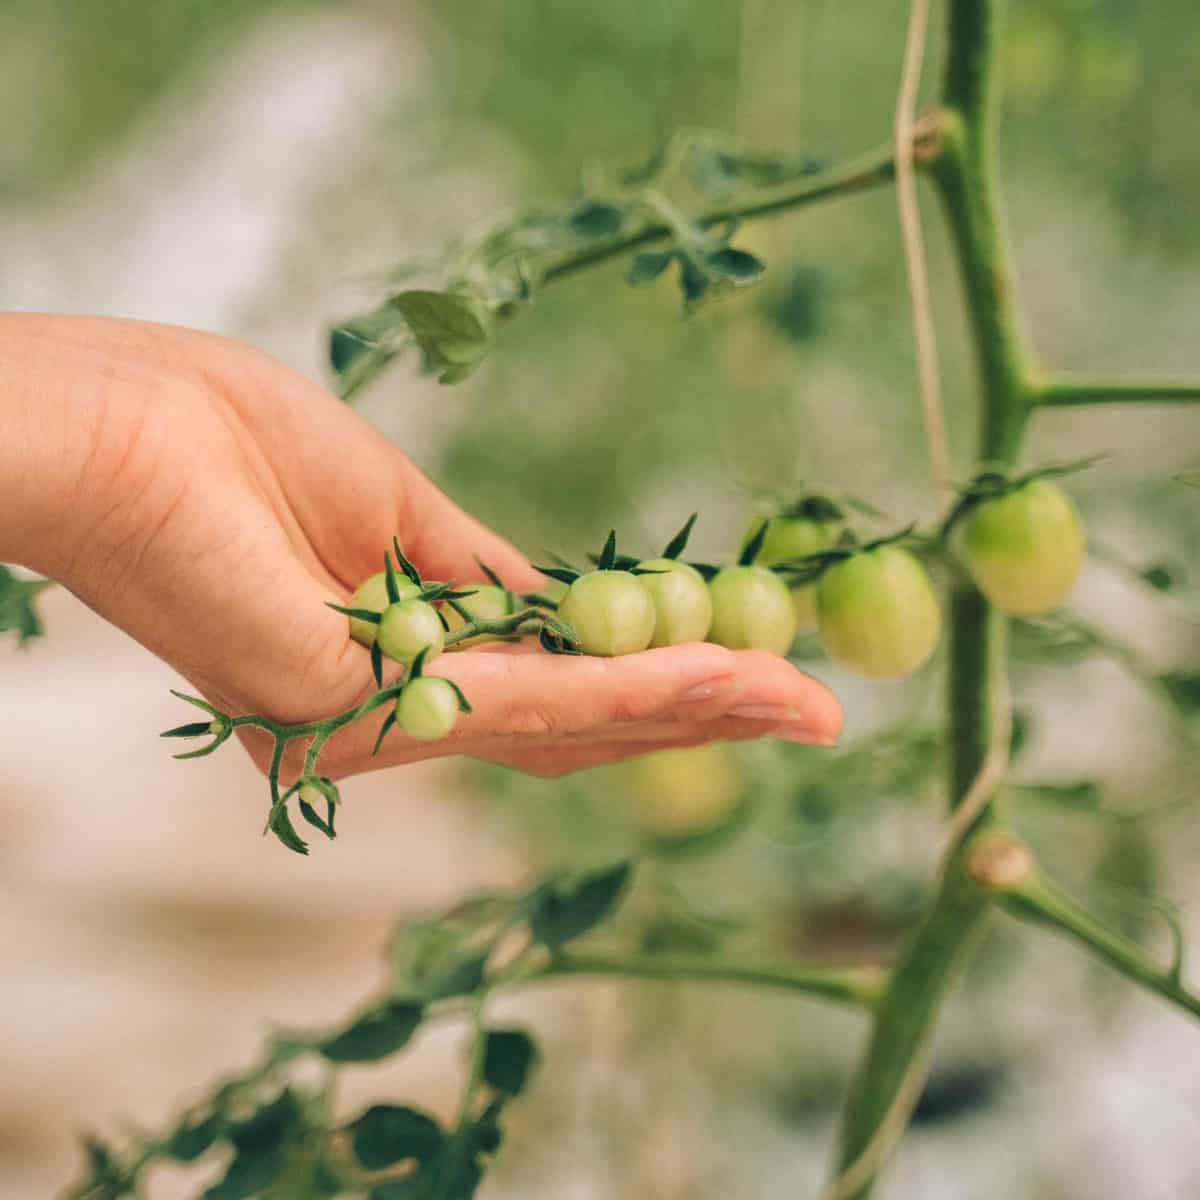 Pruning tomato plants for maximum yield